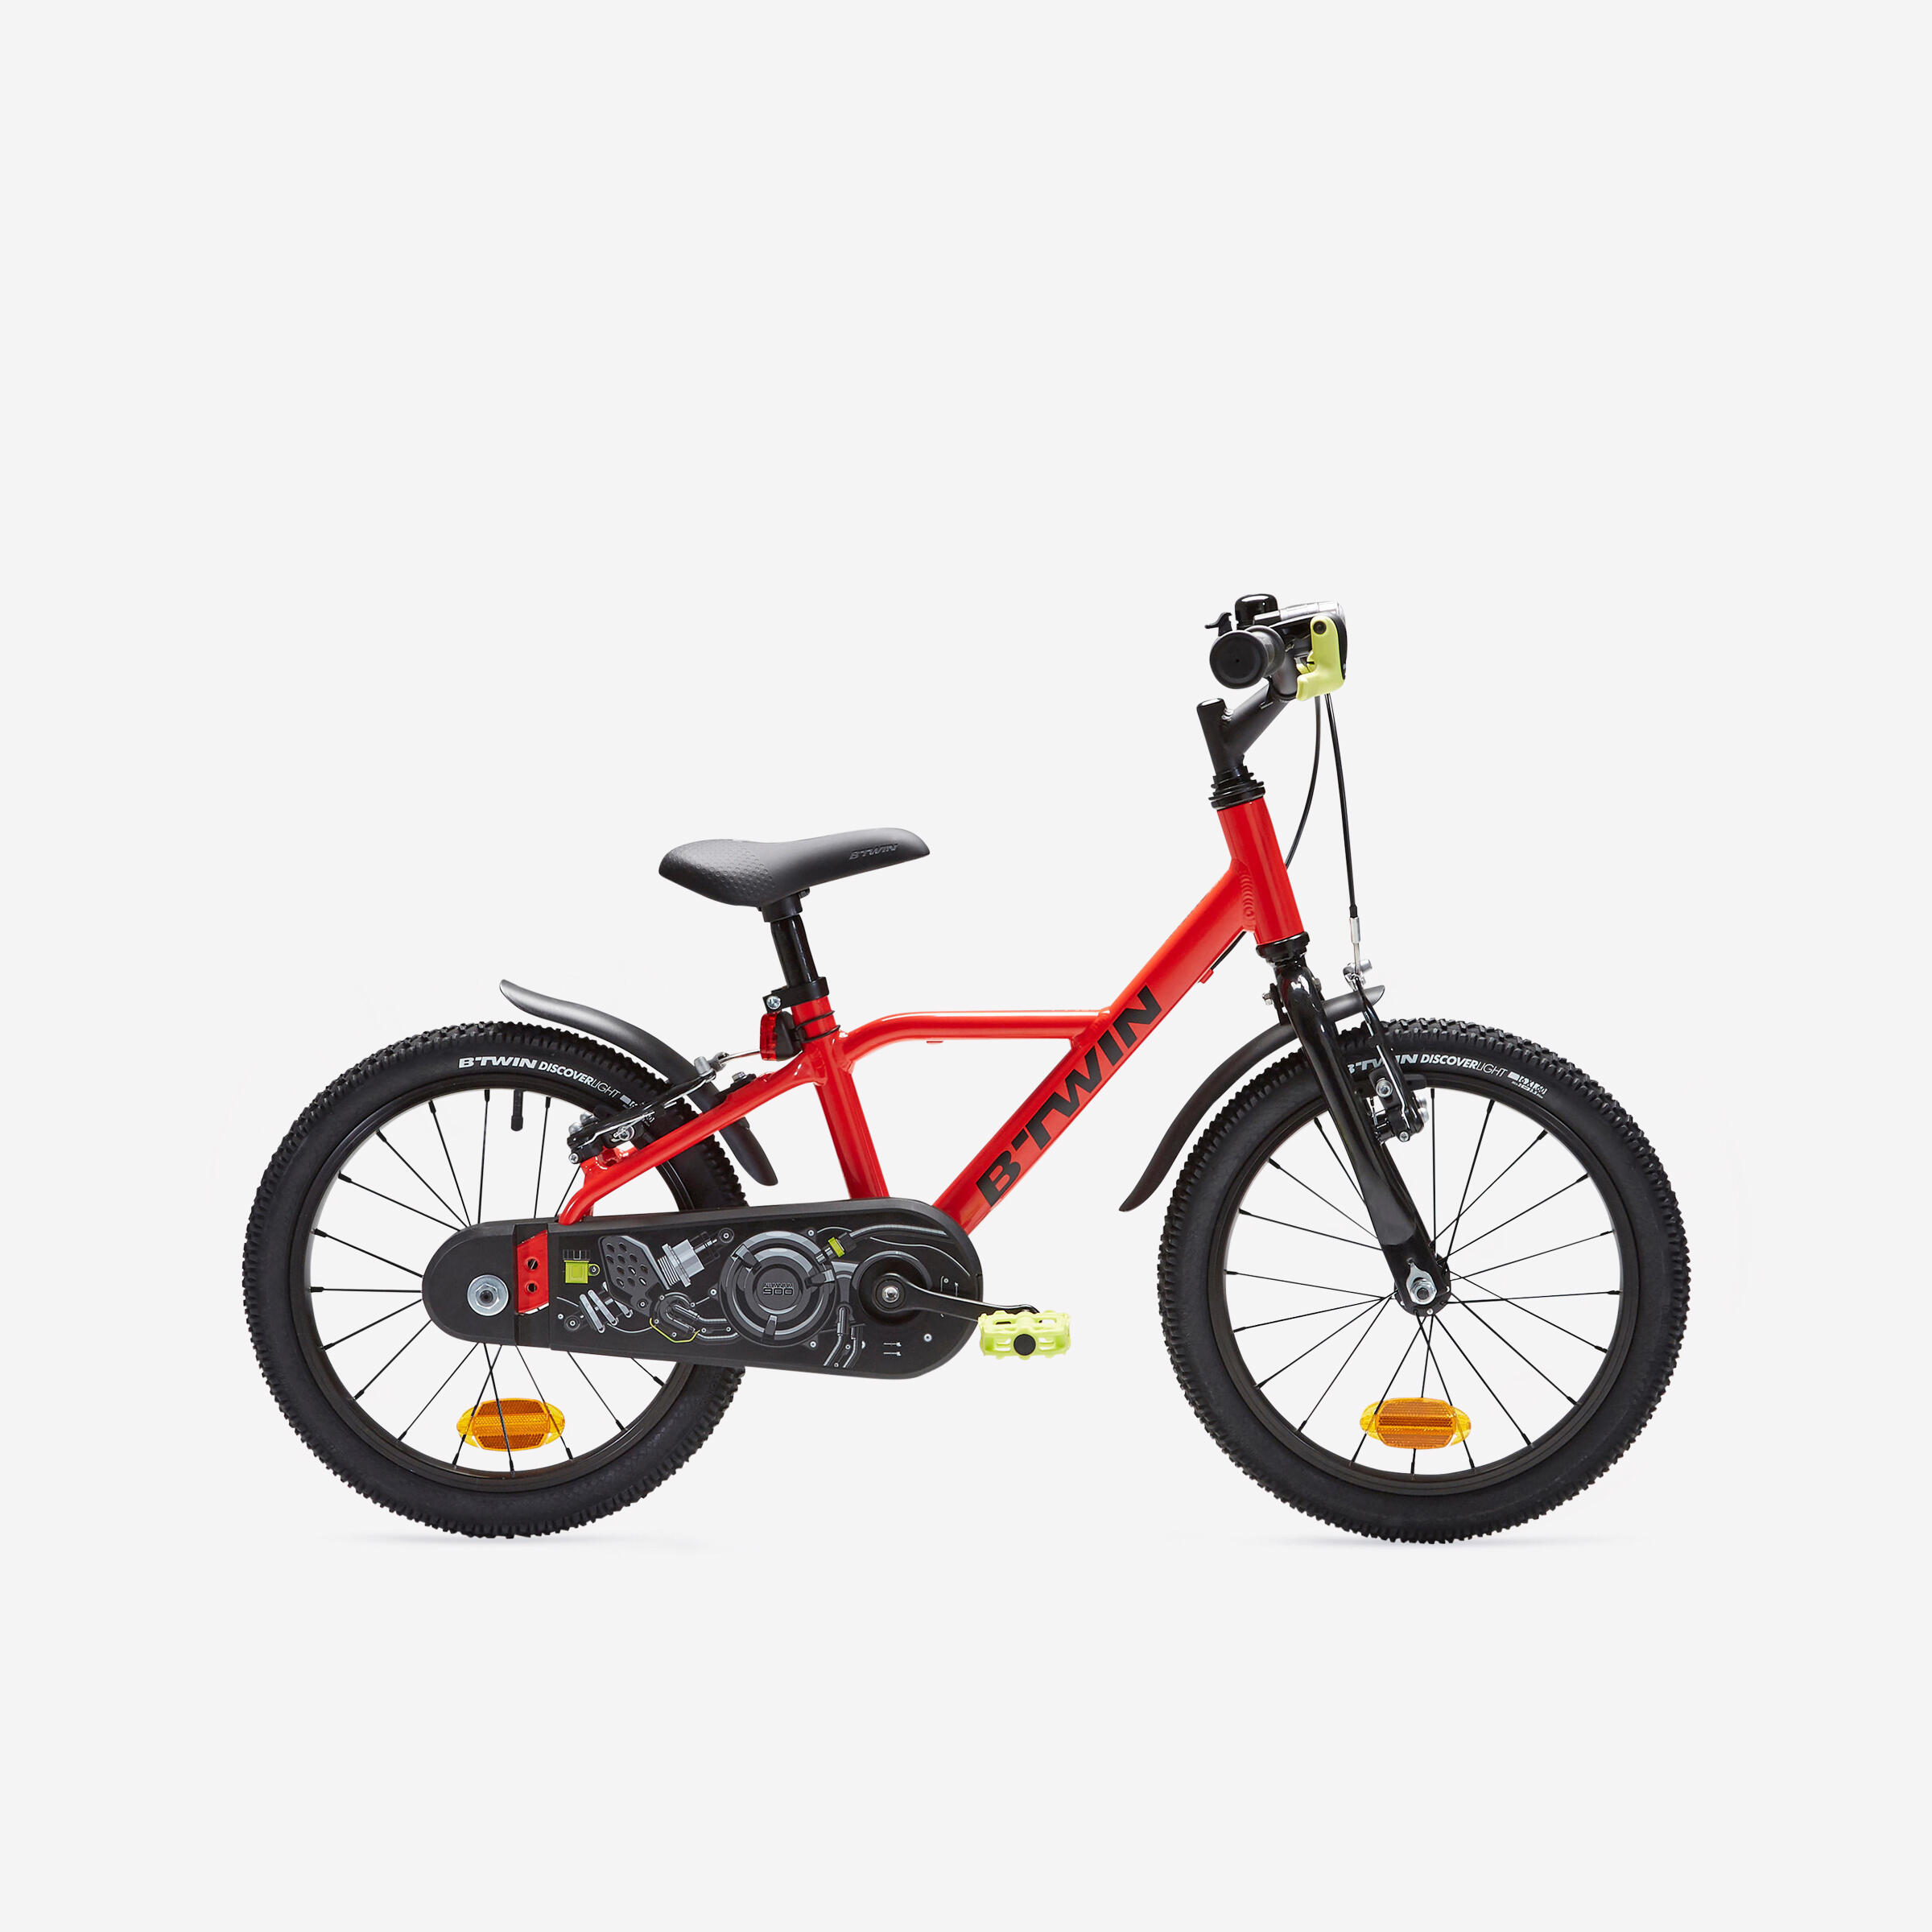 BTWIN Kids' 16-inch, chain guard, easy-braking bike, red